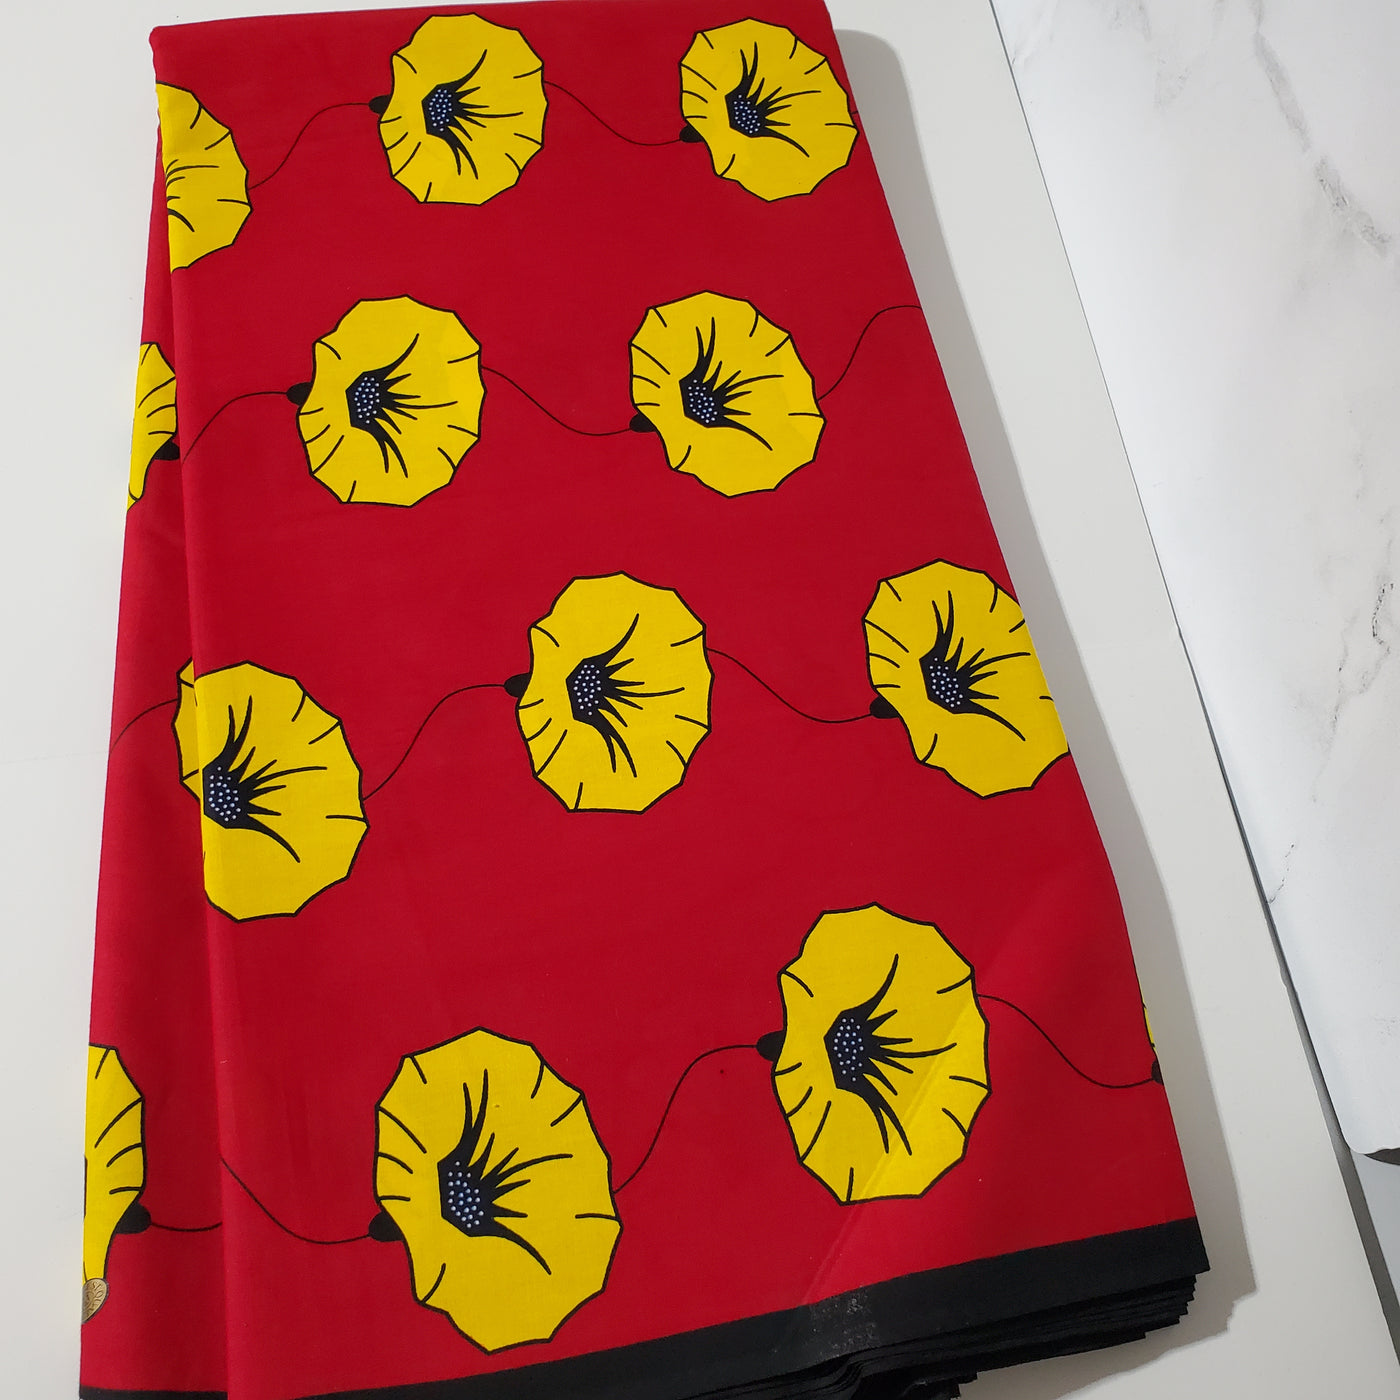 Red and Yellow Ankara Fabric, ACS0046